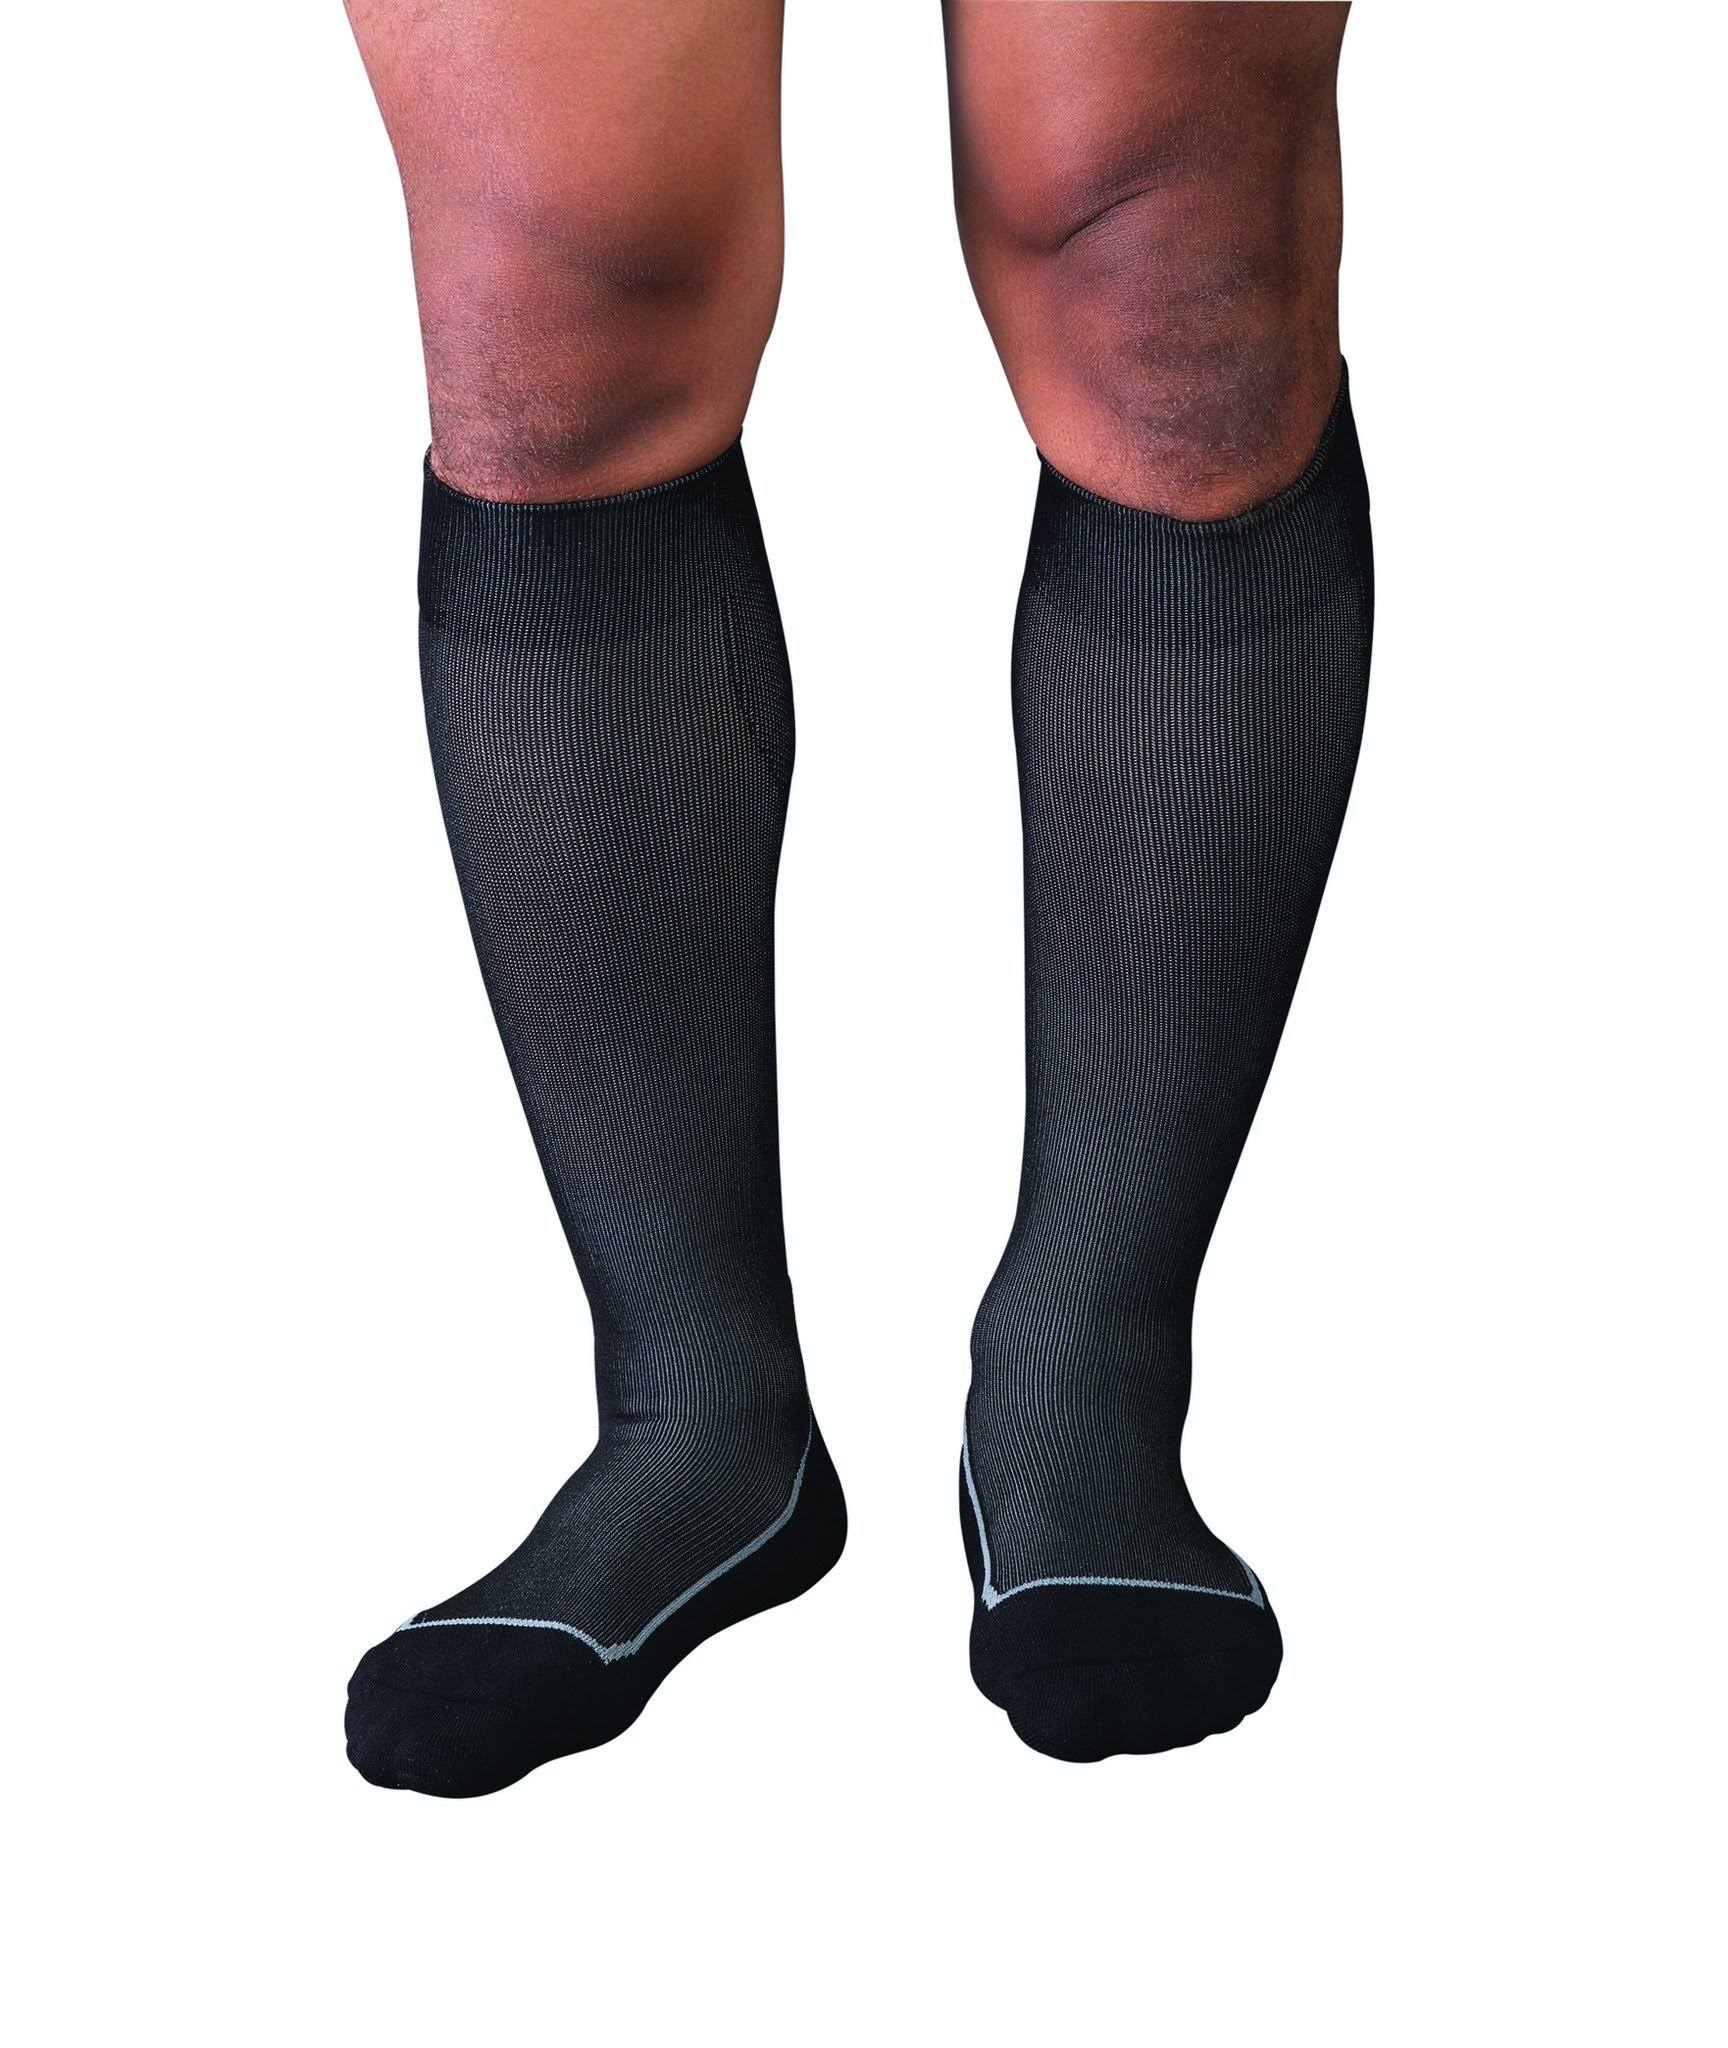 Jobst Sport Knee High 15-20 mmHg Compression Socks Black/Cool Black Medium